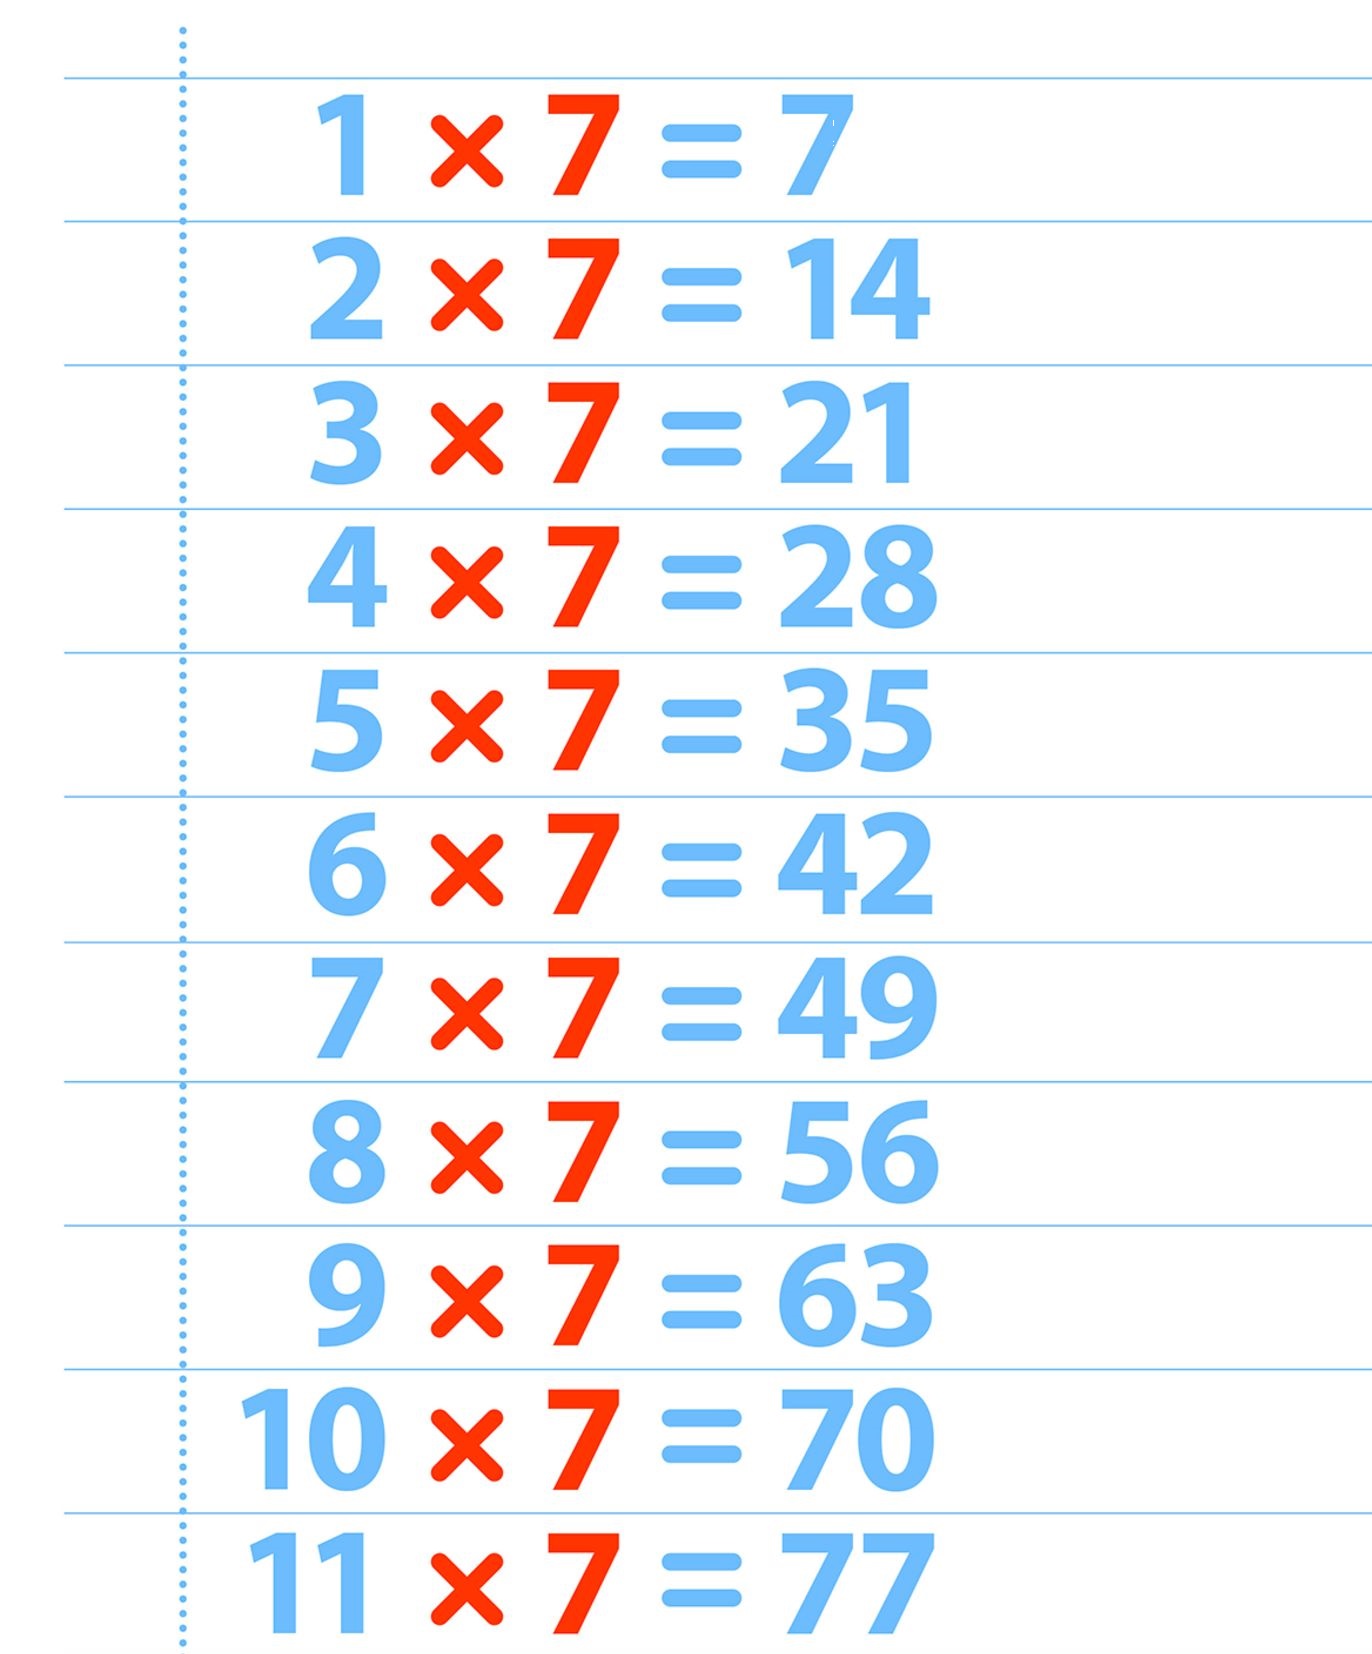 Free Printable Multiplication Table 7 Charts Worksheet 